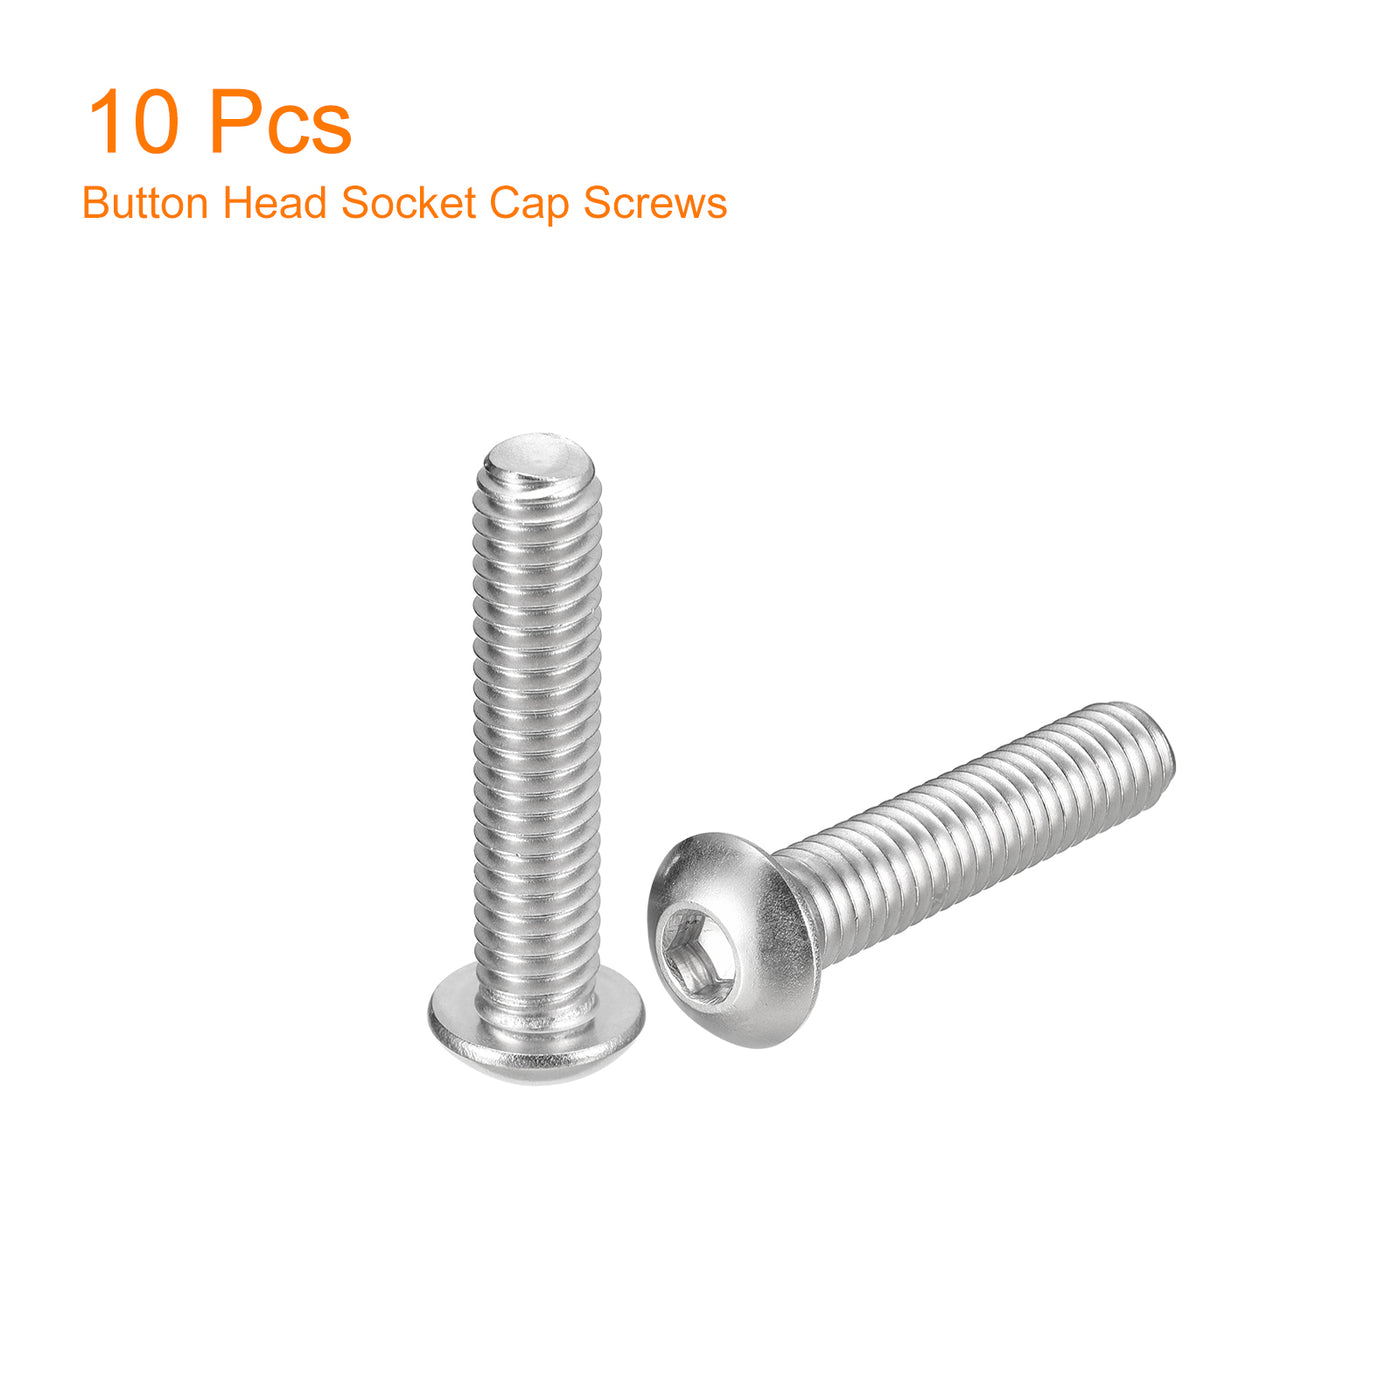 uxcell Uxcell 5/16-18x1-1/2" Button Head Socket Cap Screws, 10pcs 304 Stainless Steel Screws